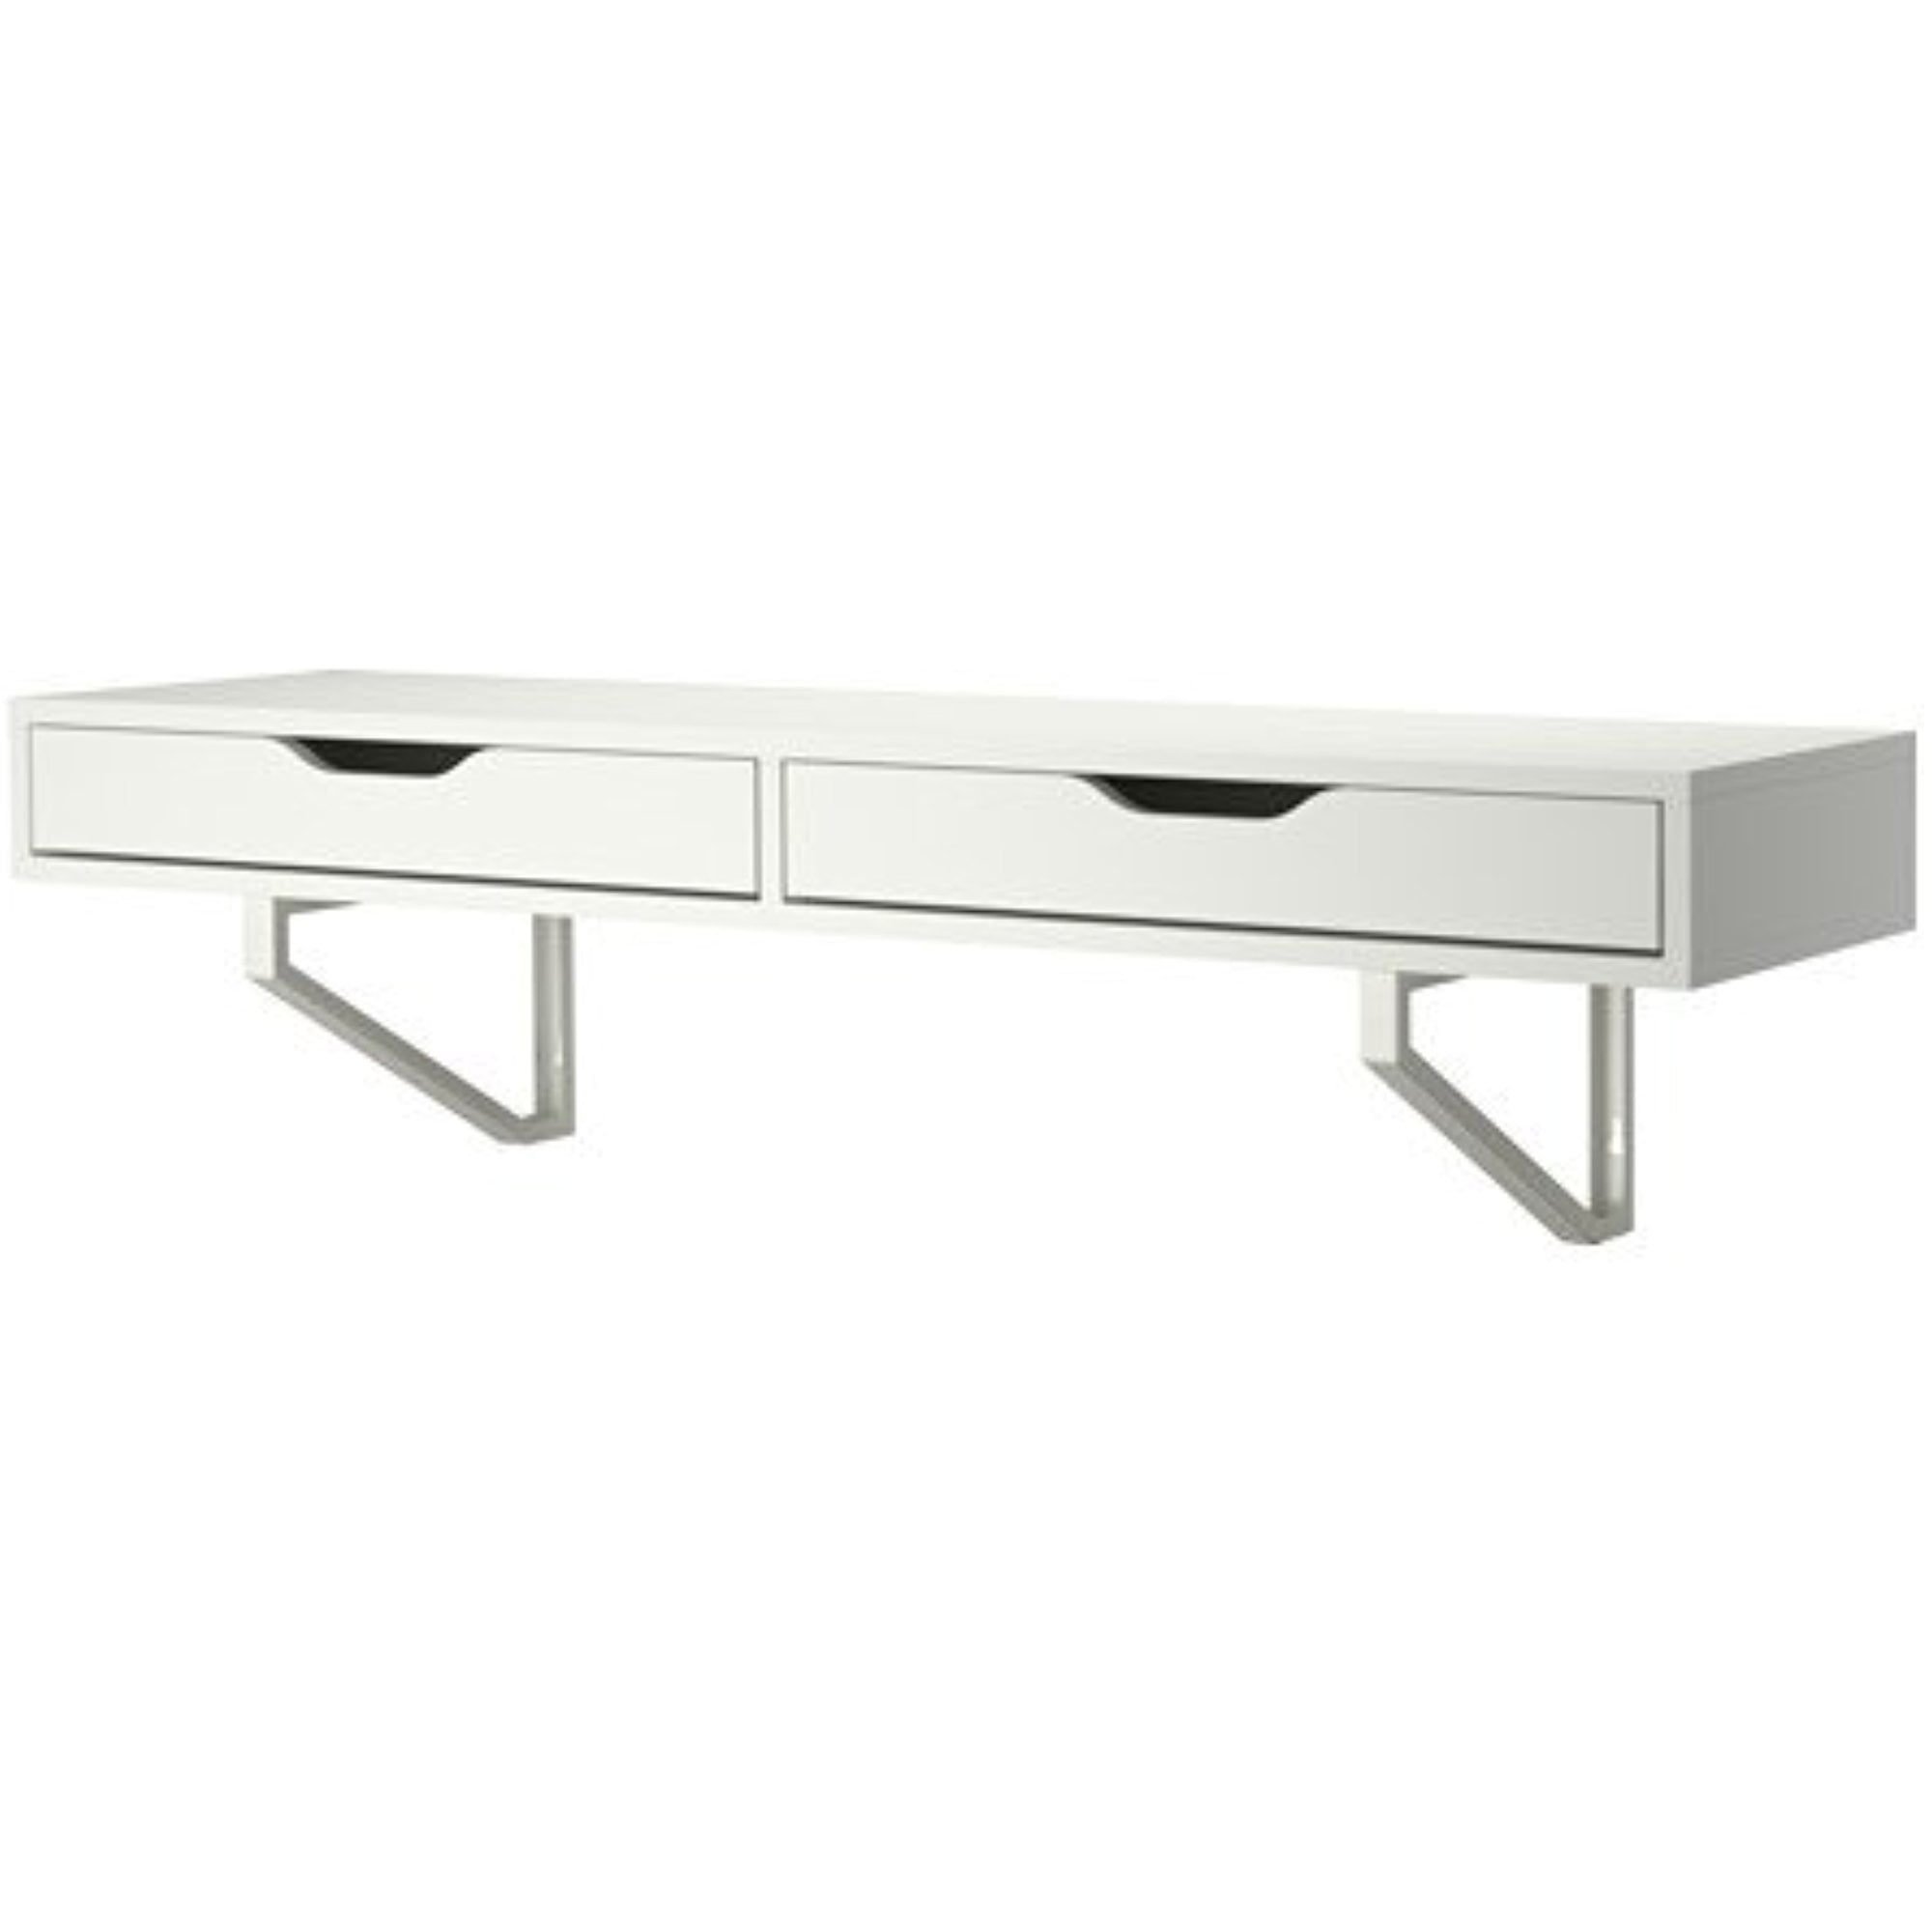 Ikea White Wall Shelf with drawers 46 7/8x11 3/8 ", 20202.142320.3830